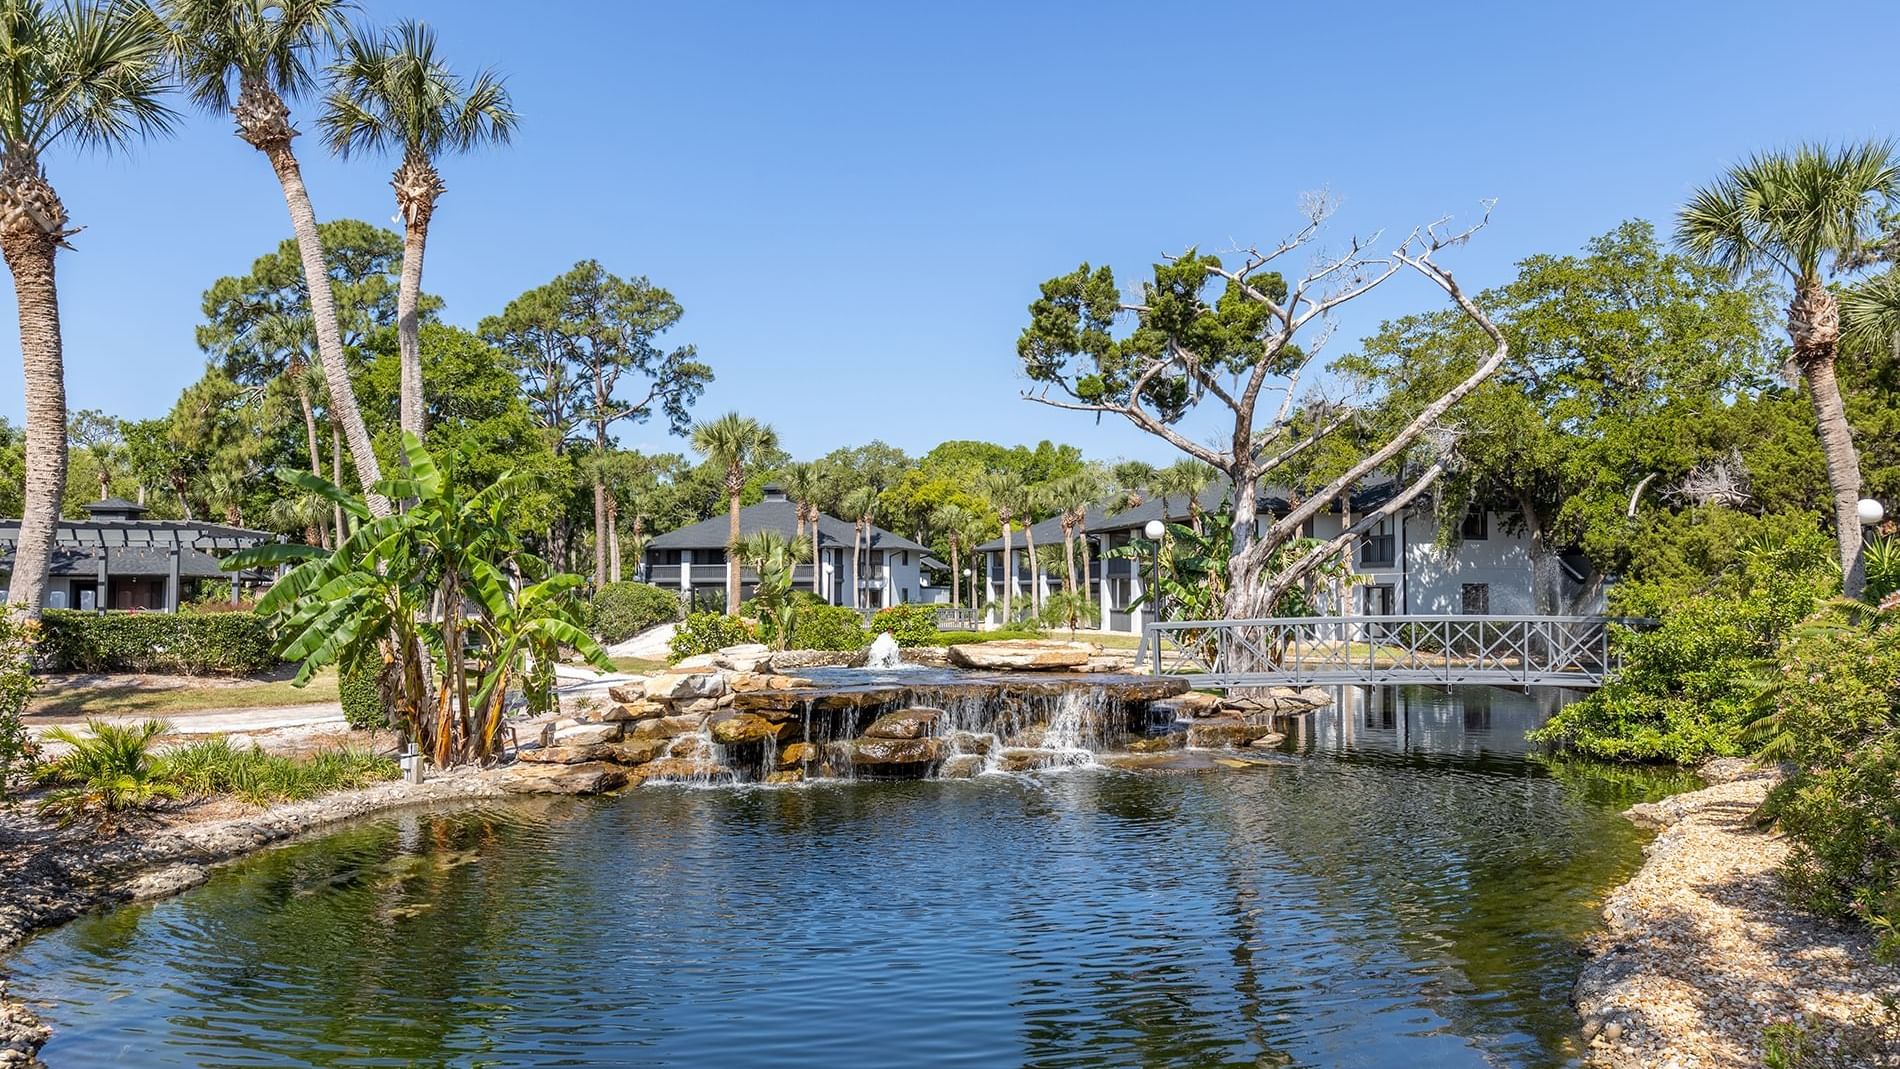  Exterior view of palm coast at Legacy Vacation Resorts  